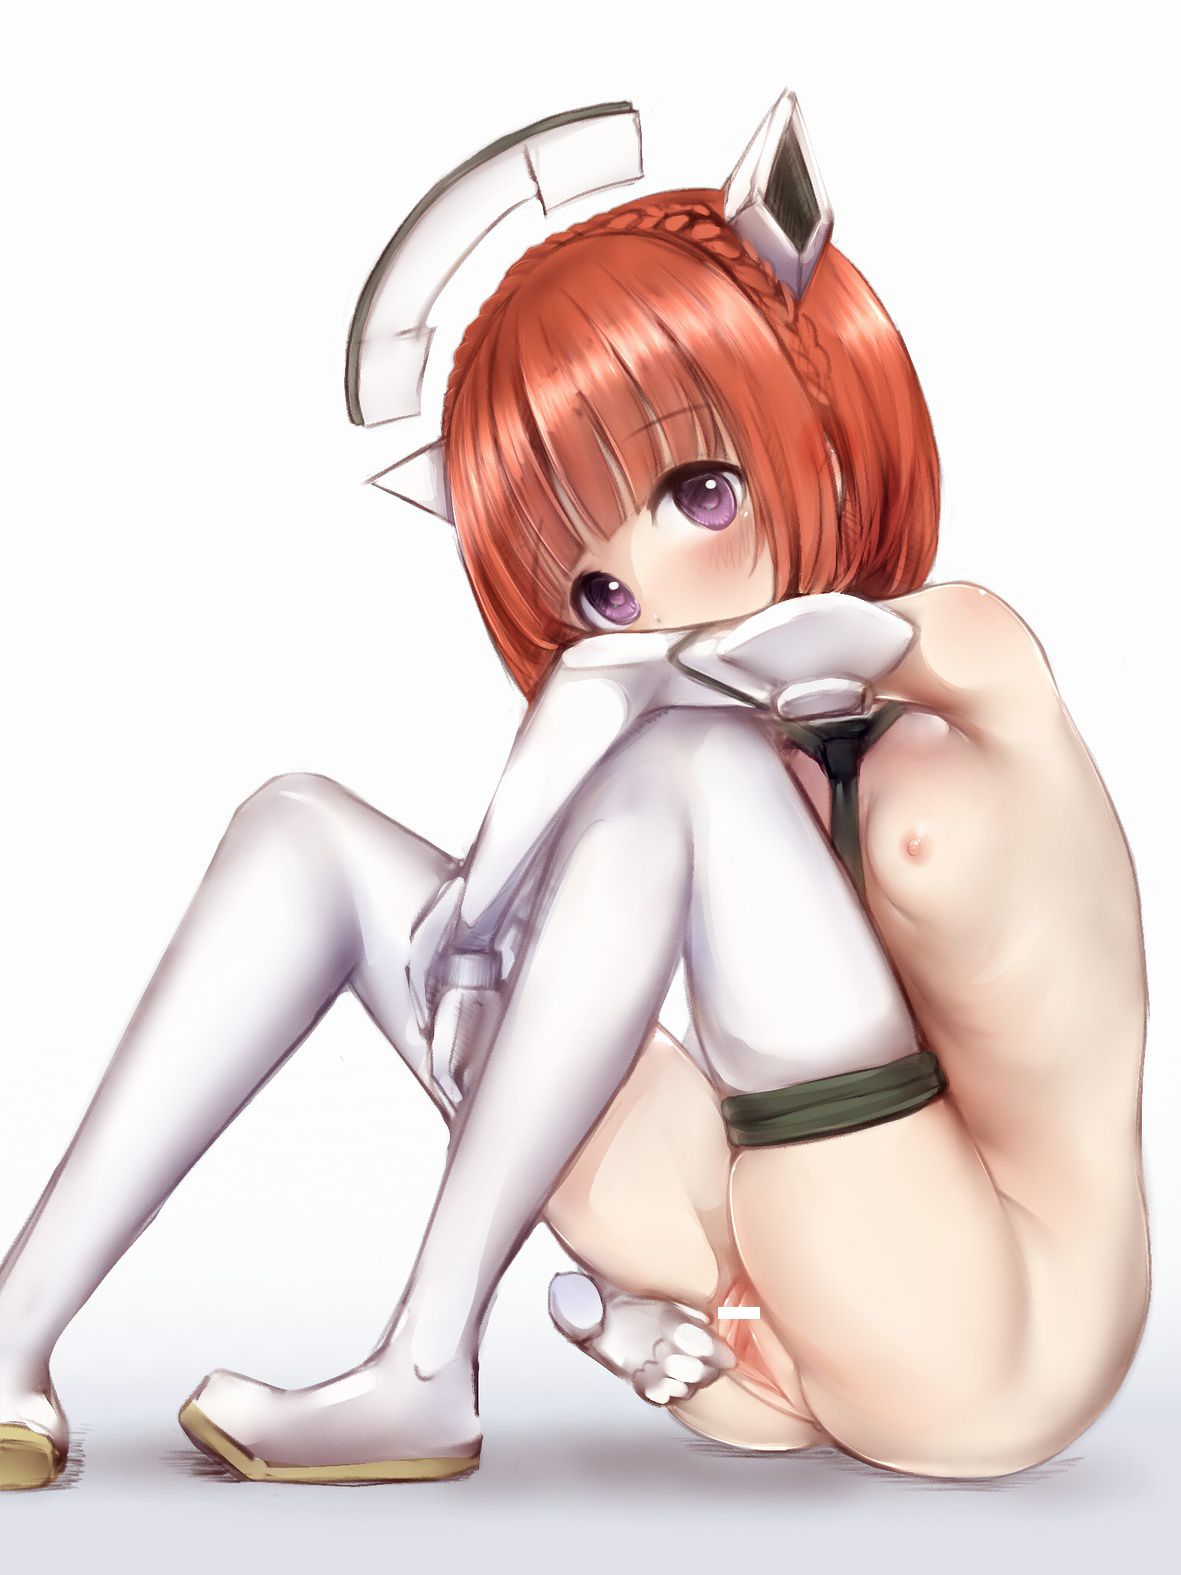 【Aikawa Aihana-chan】Secondary erotic image of Alice Gear Aegis JC3 year old and owner of a young loli body Aikawa Aihana-chan 19